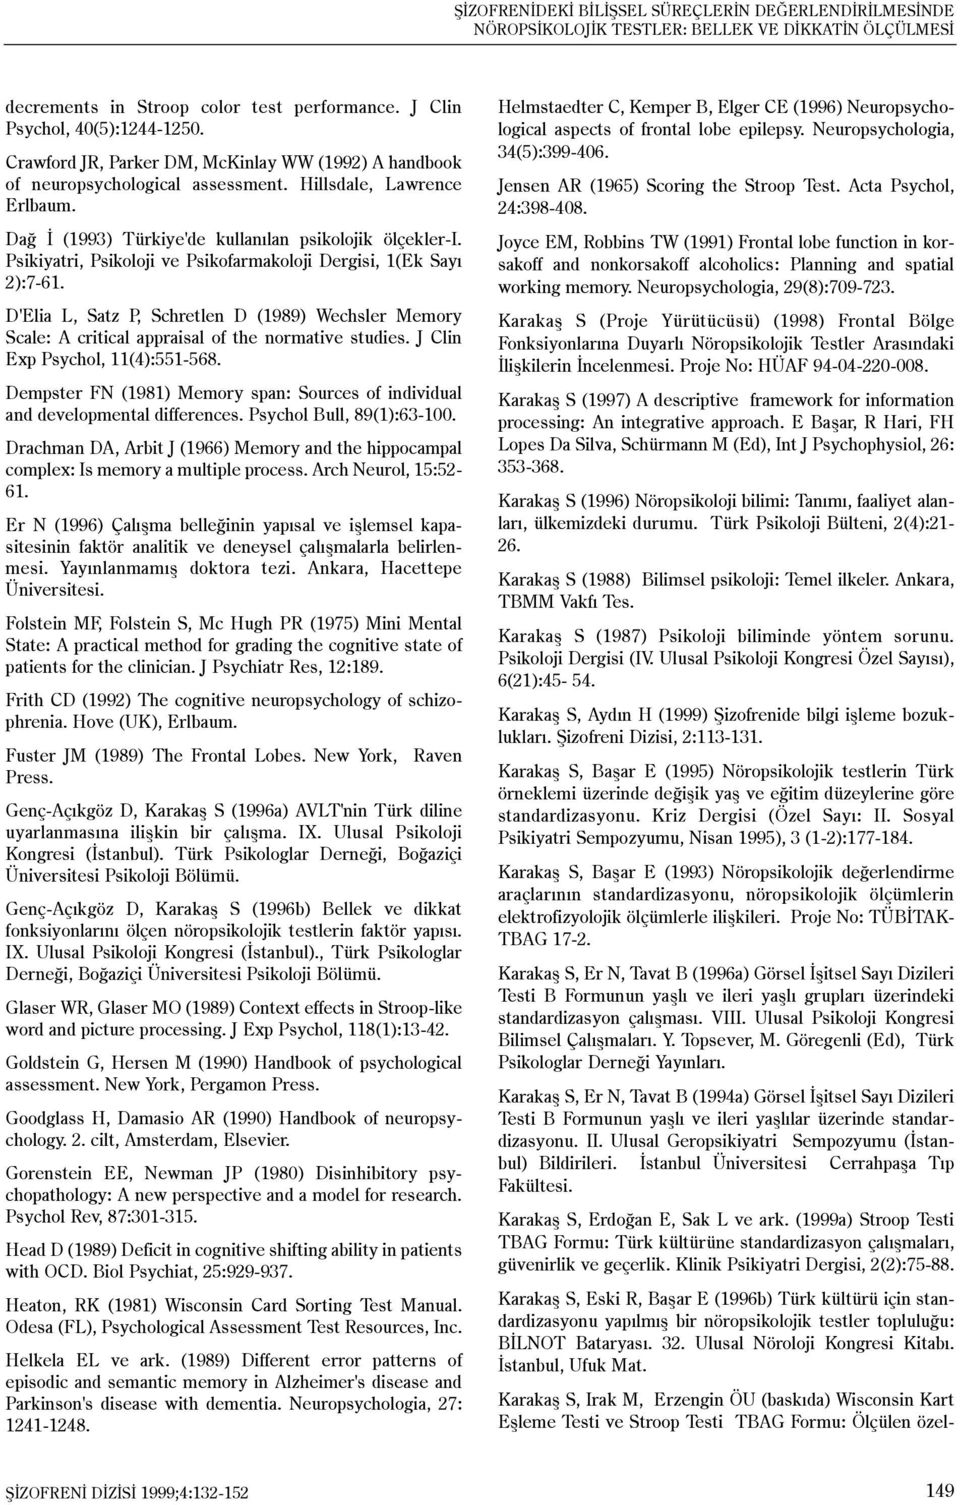 Psikiyatri, Psikoloji ve Psikofarmakoloji Dergisi, 1(Ek Sayý 2):7-61. D'Elia L, Satz P, Schretlen D (1989) Wechsler Memory Scale: A critical appraisal of the normative studies.